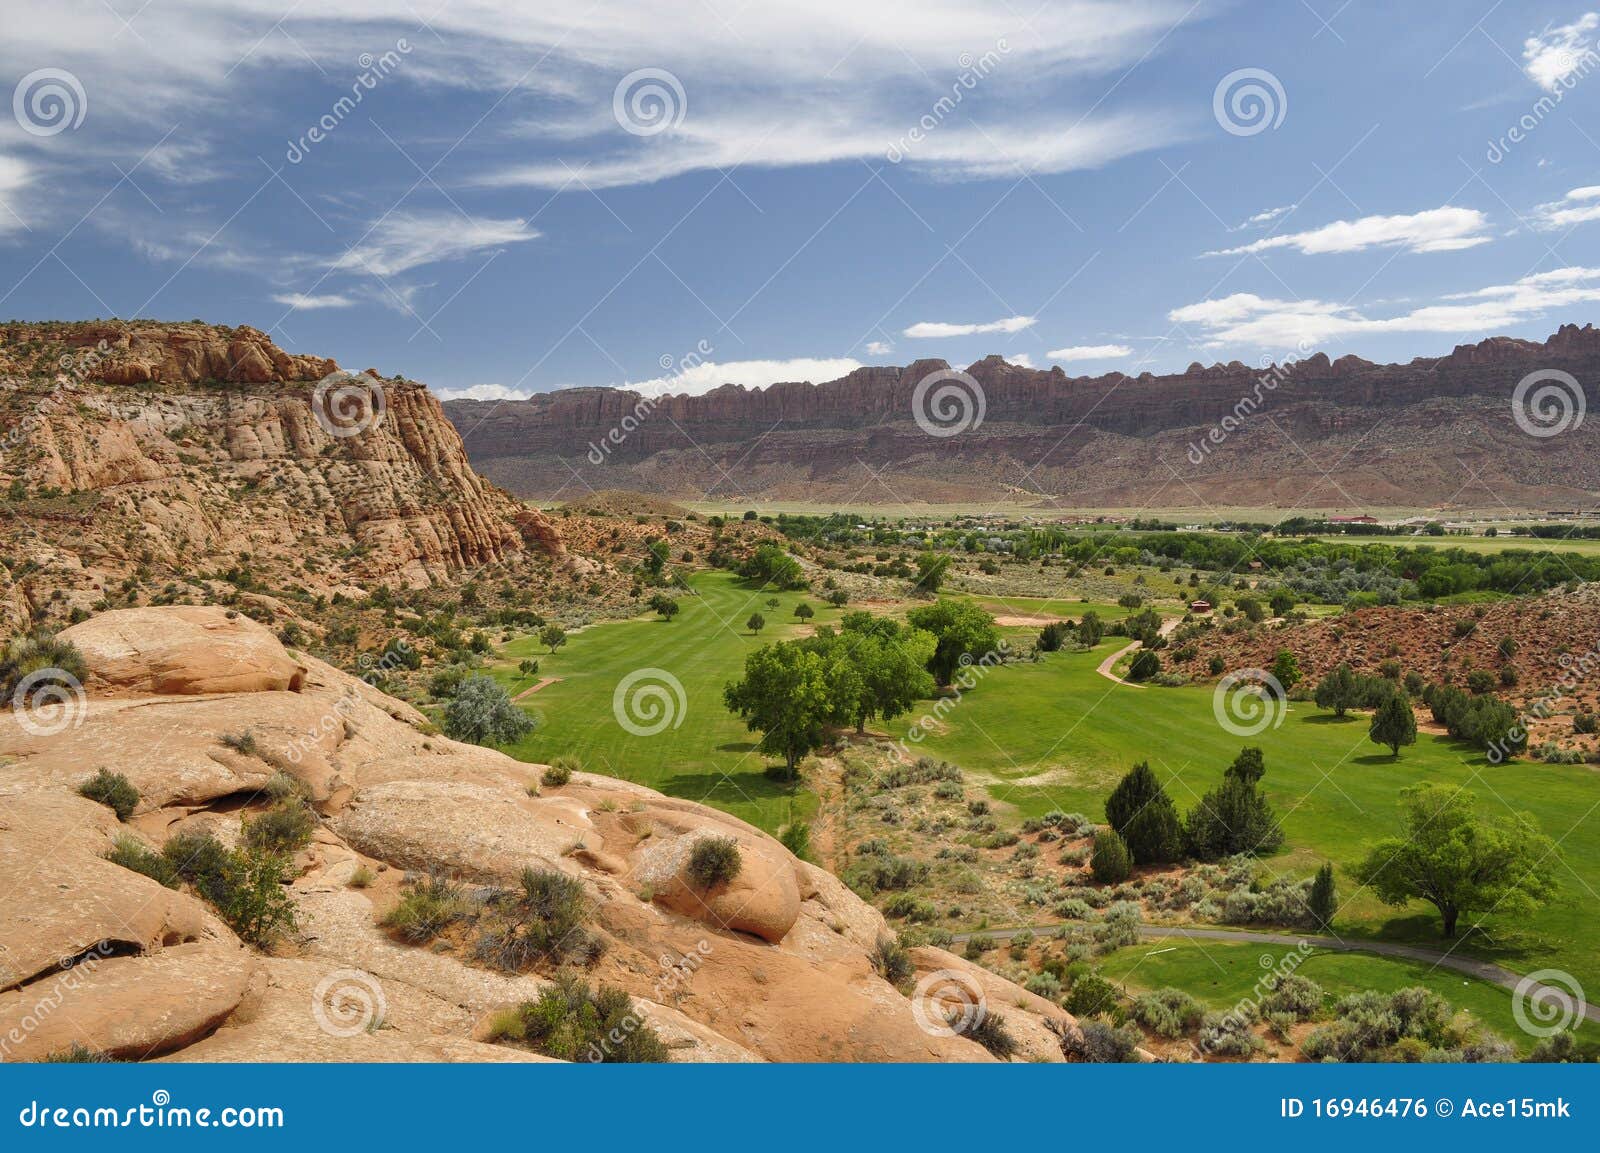 golf course in moab utah